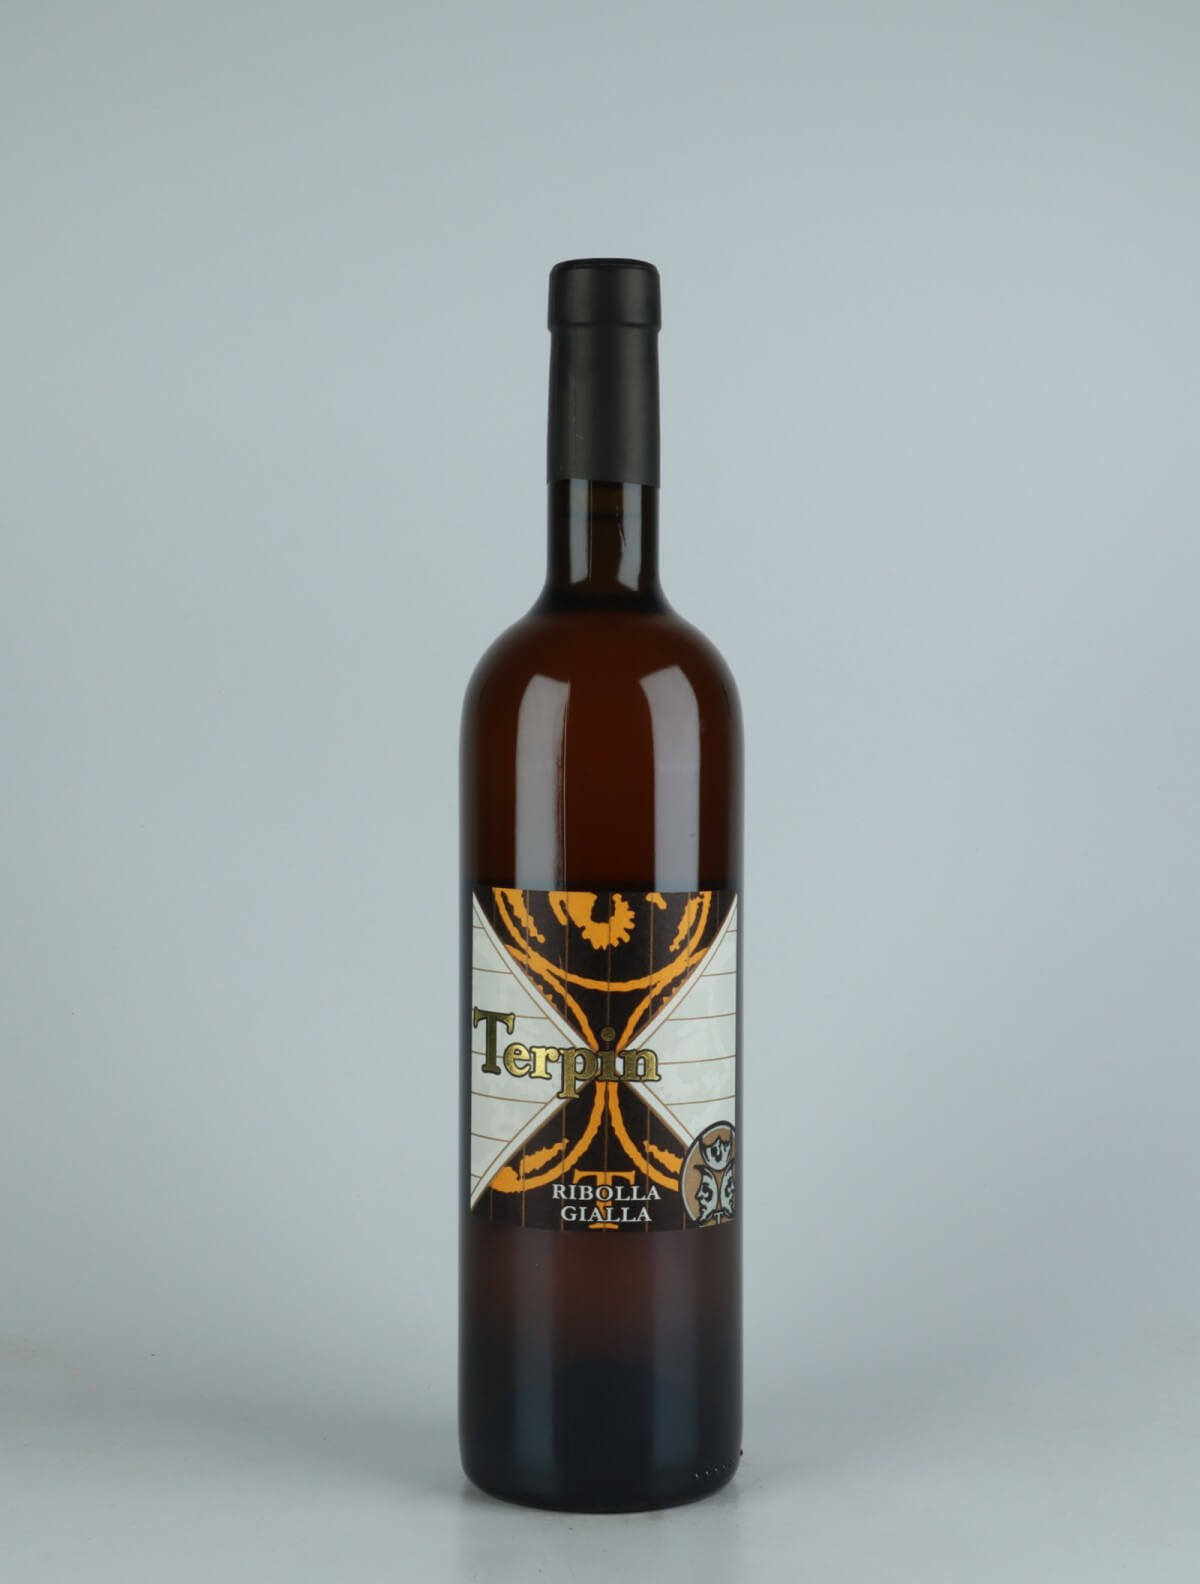 A bottle 2016 Ribolla Gialla Orange wine from Franco Terpin, Friuli in Italy